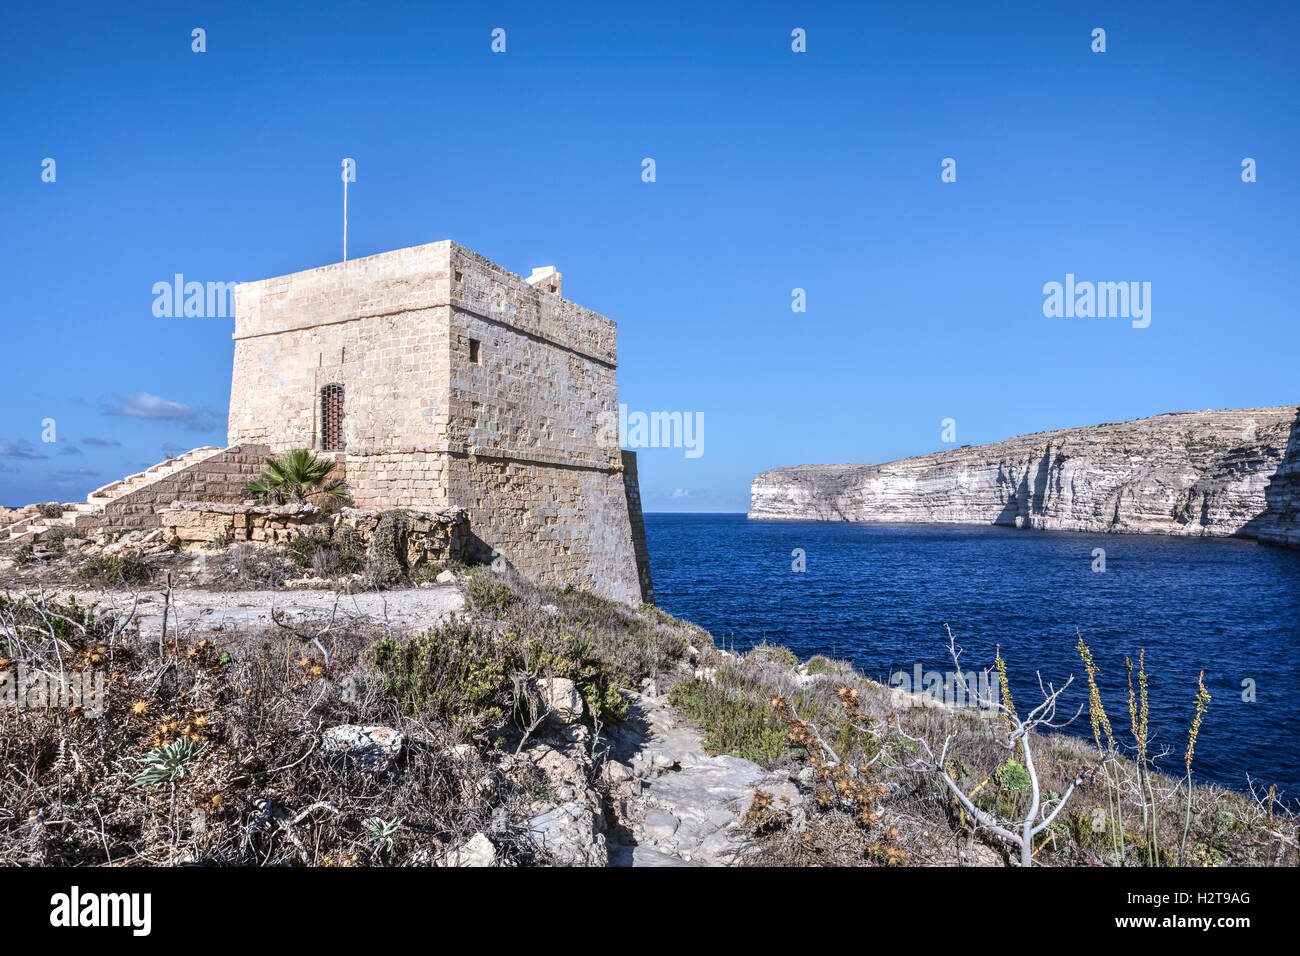 Baia di Xlendi, Torre di Xlendi, Gozo, Malta Foto Stock